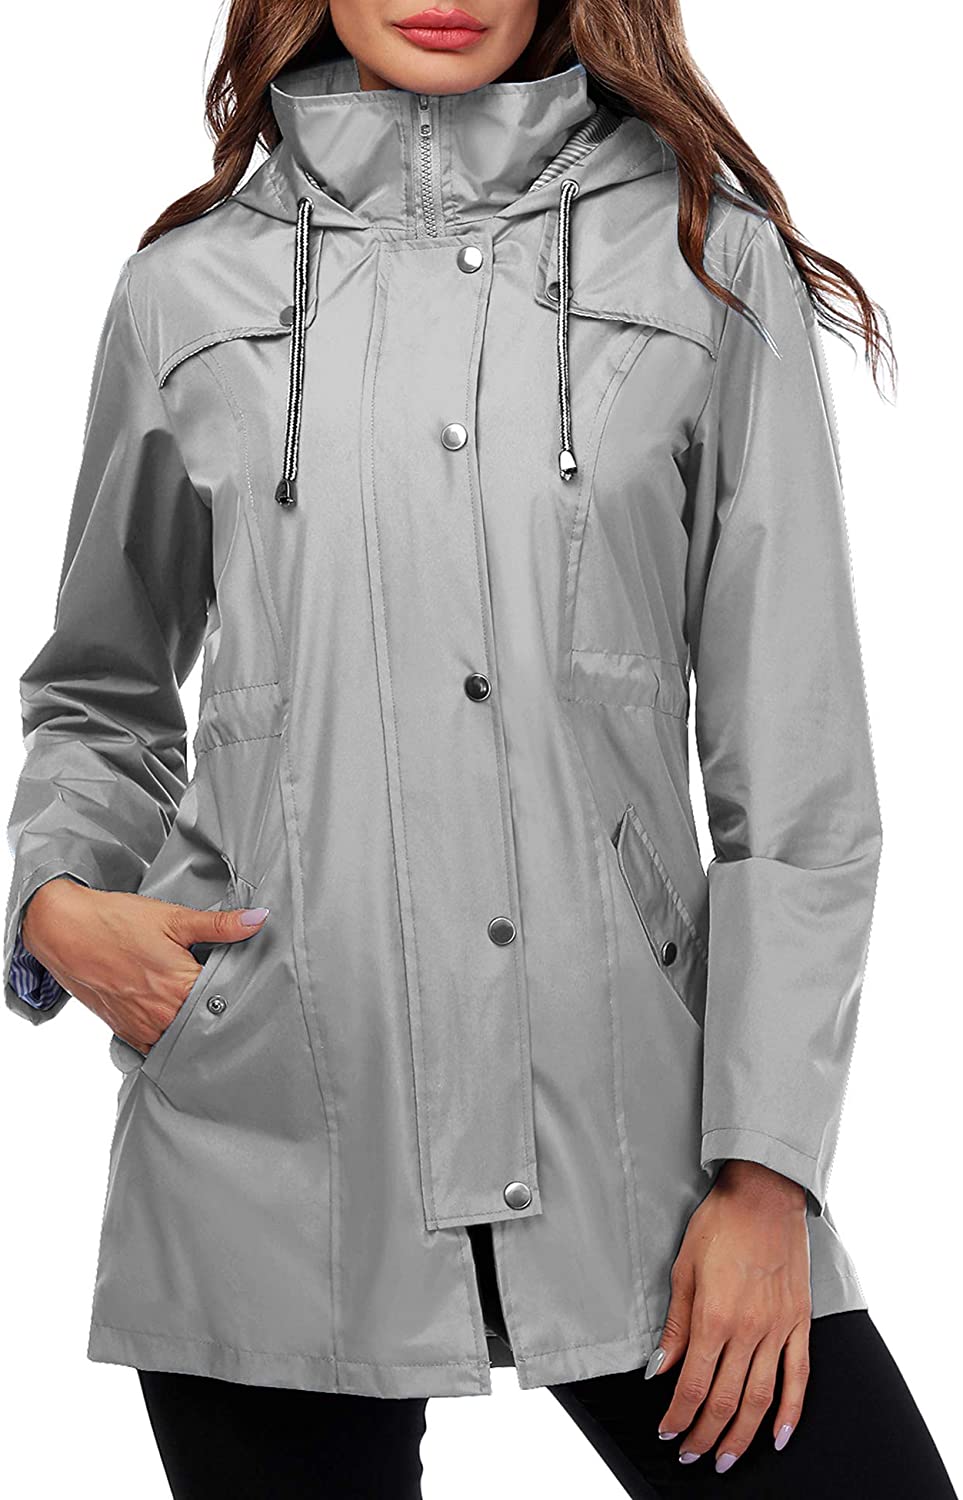 Dainzuy Women Waterproof Raincoat Lightweight Rain Jacket Hooded Windbreaker Winter Outdoor Trench Coats 